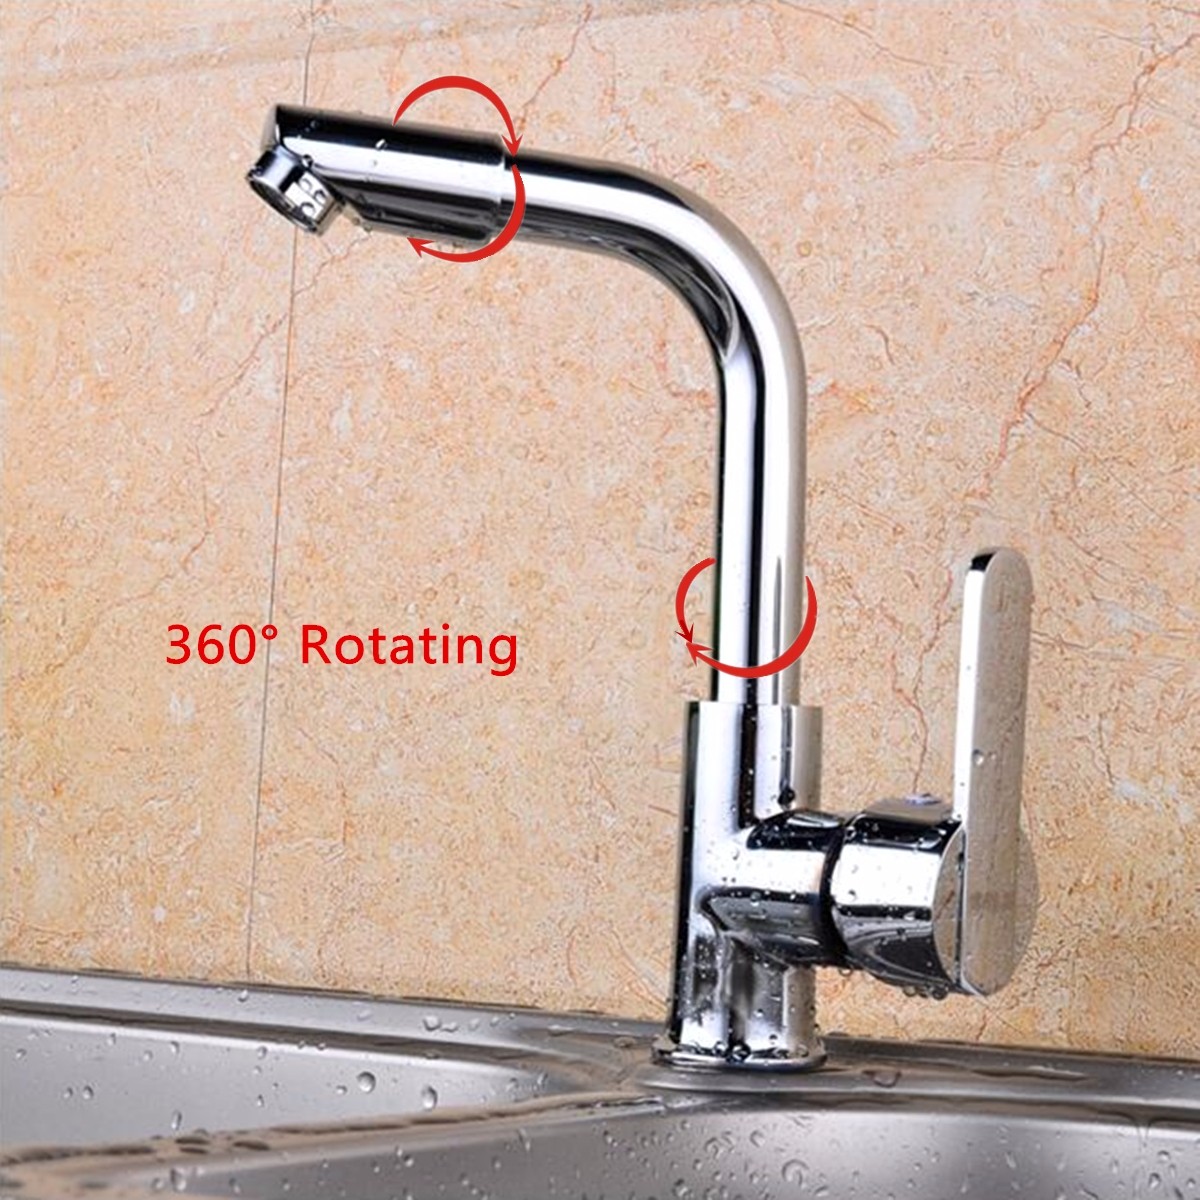 360deg-Chrome-Faucet-Kitchen-Bathroom-Basin-Sink-Hot-amp-Cold-Water-Mixer-Tap-1347781